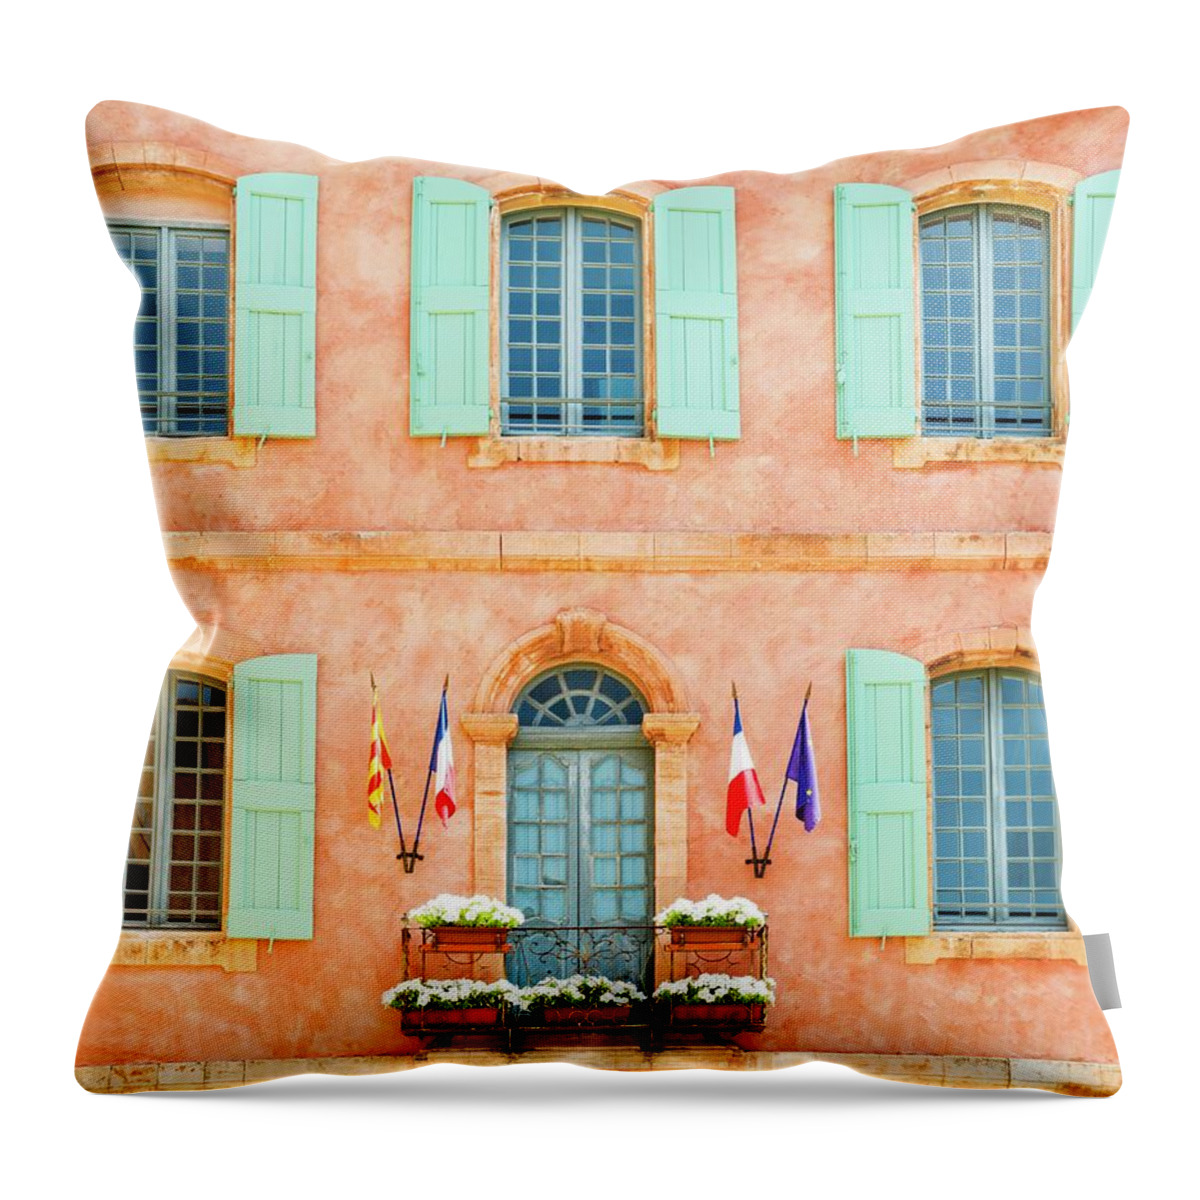 Estock Throw Pillow featuring the digital art France, Provence-alpes-cote D'azur, Luberon Regional Nature Park, Roussillon, Town Hall Facade by Jordan Banks